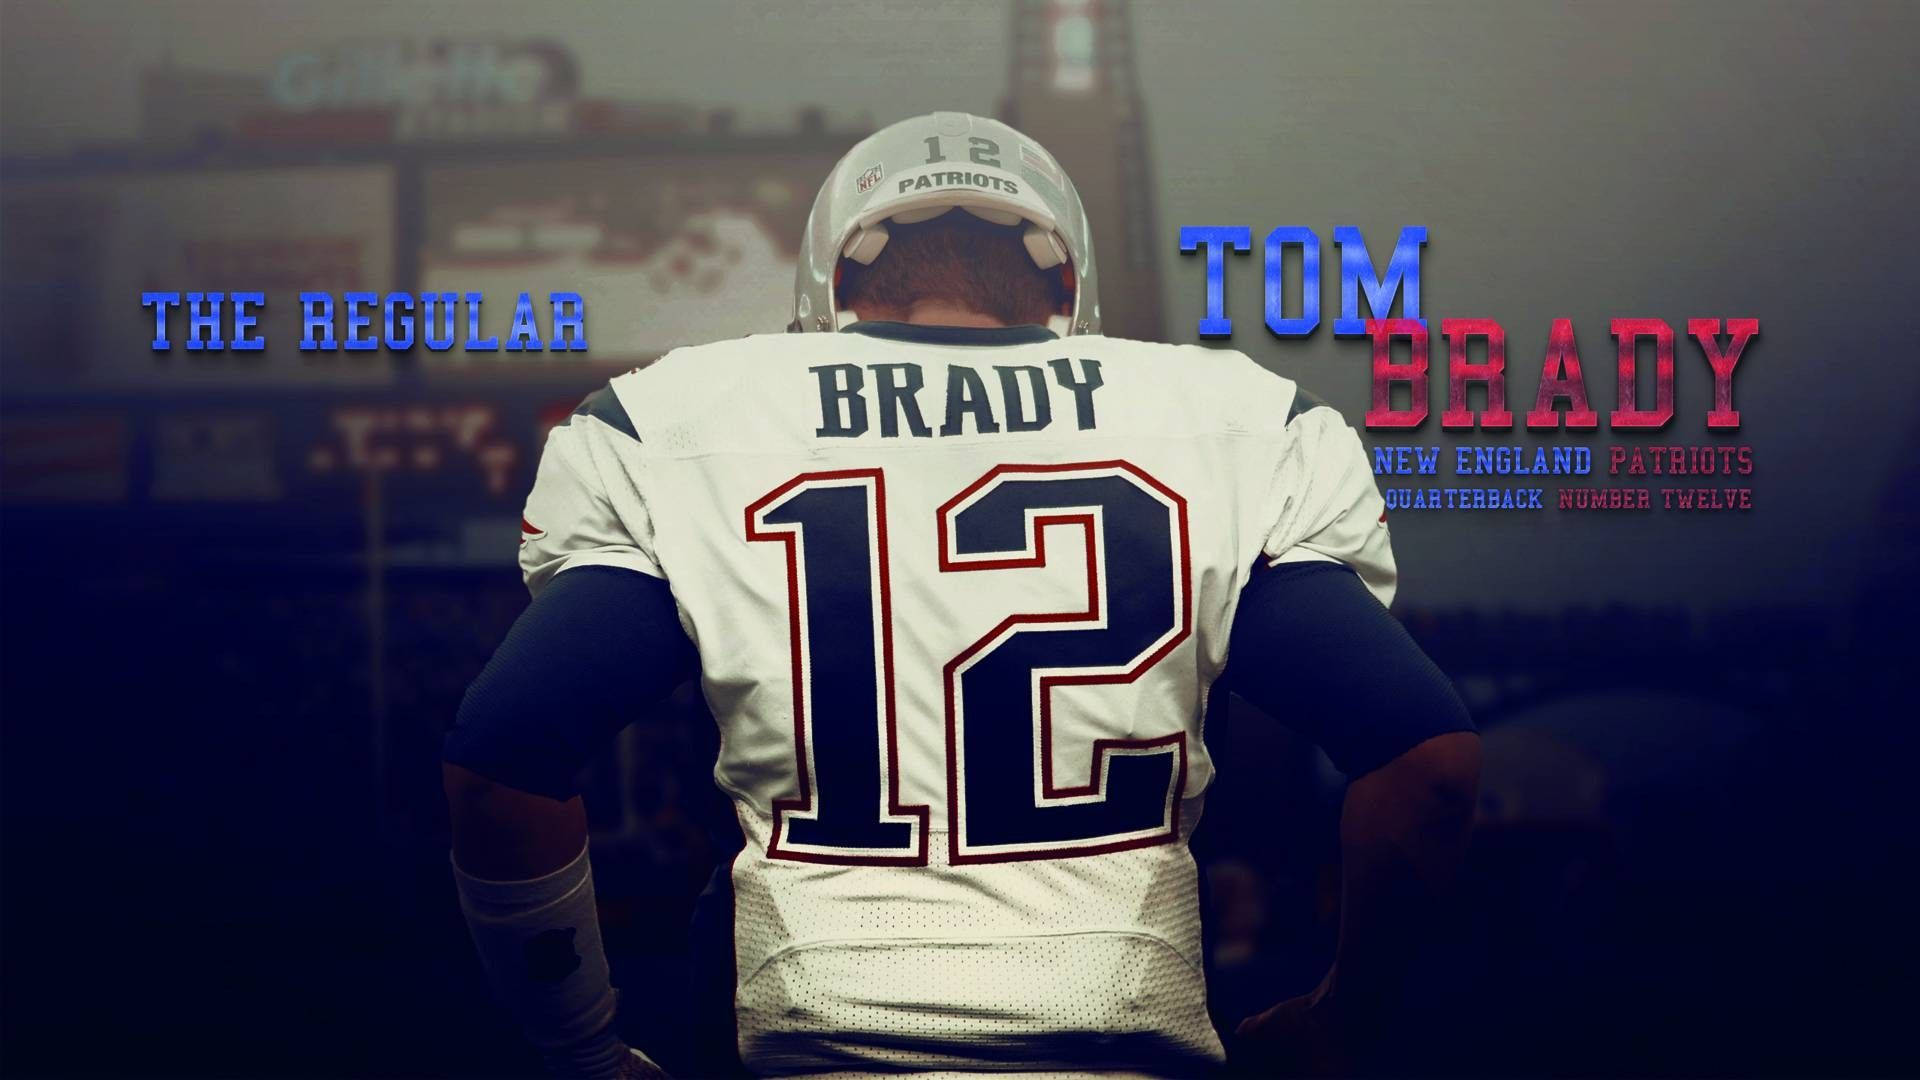 Tom Brady The Regular